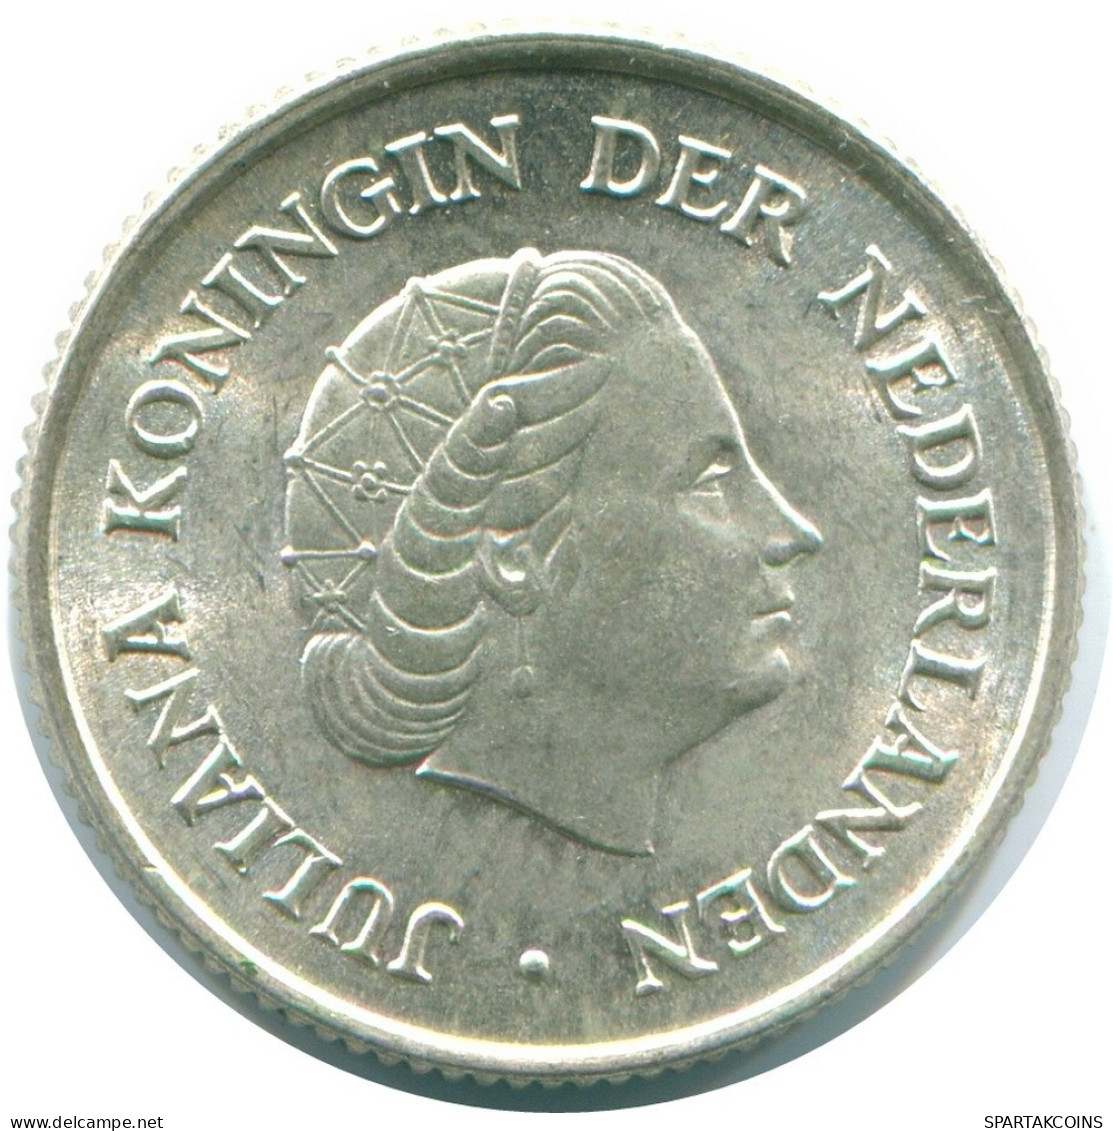 1/4 GULDEN 1970 NIEDERLÄNDISCHE ANTILLEN SILBER Koloniale Münze #NL11624.4.D.A - Netherlands Antilles